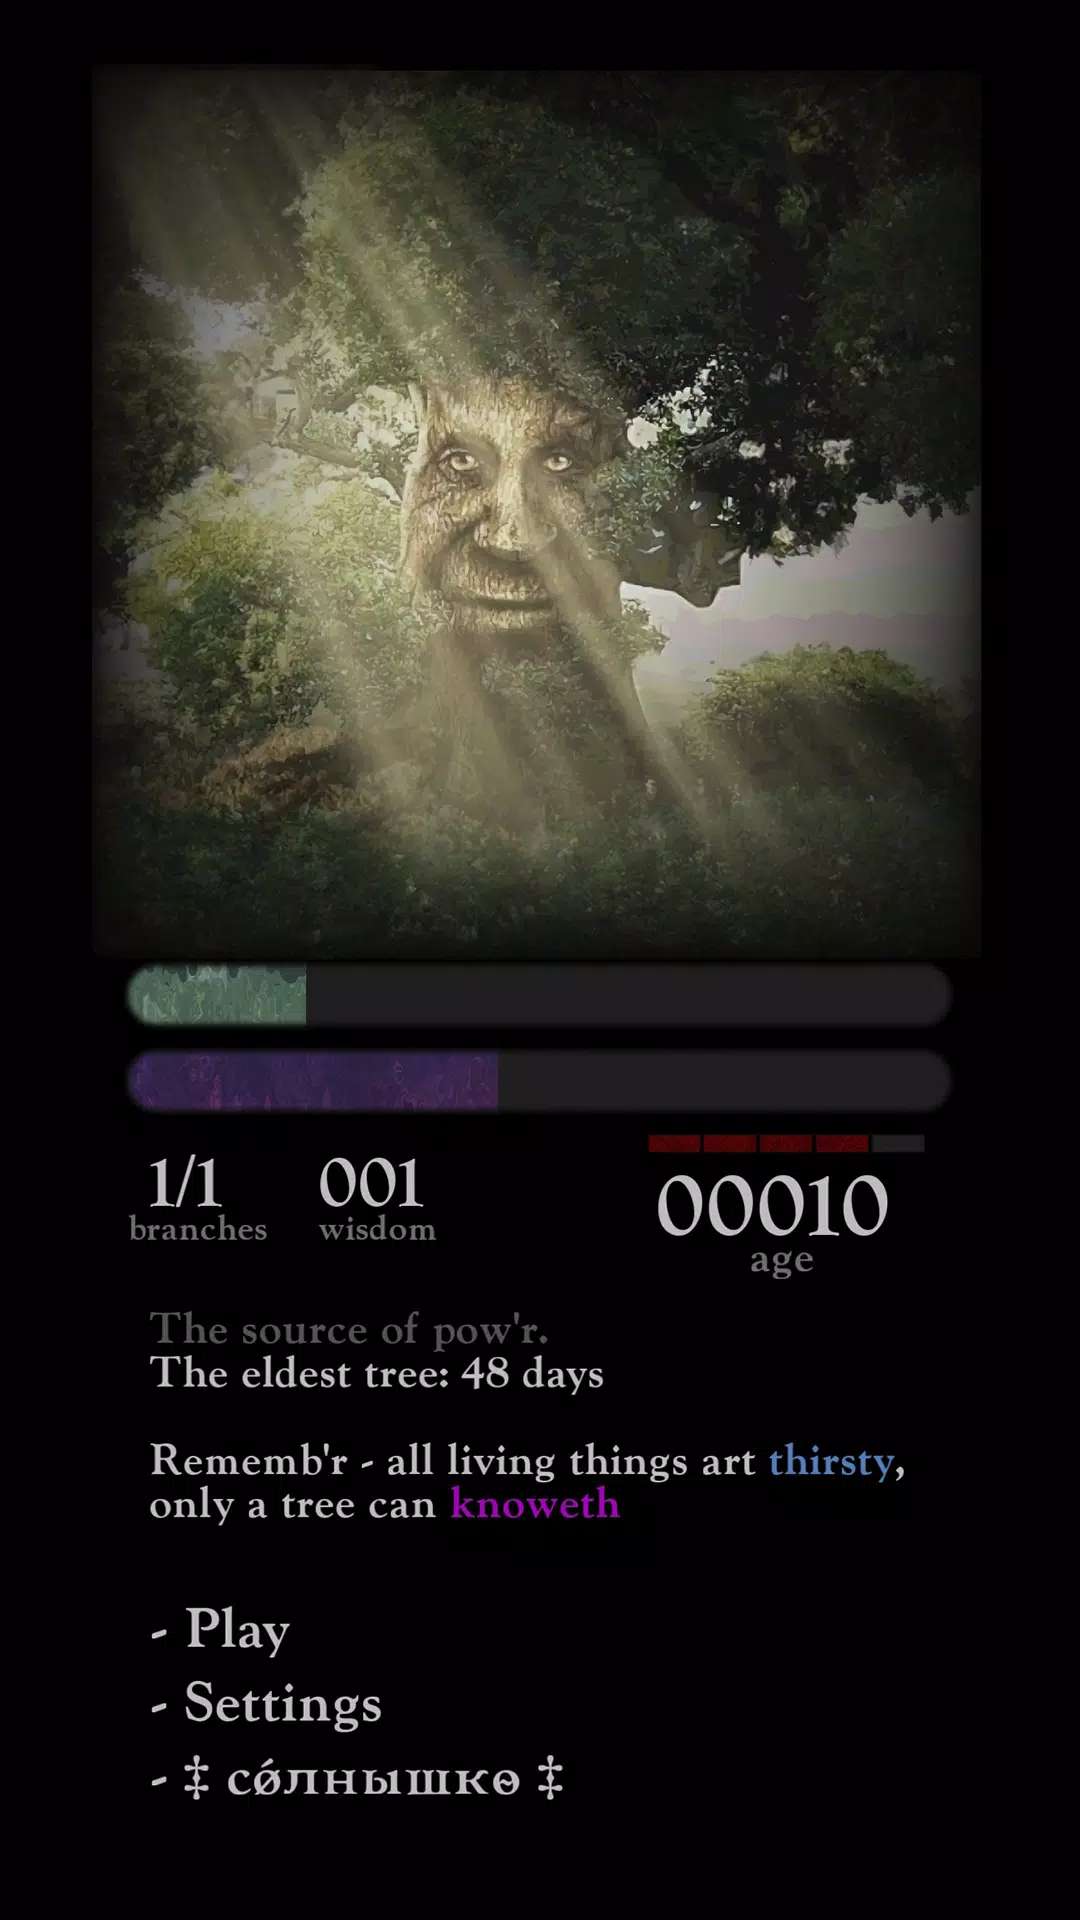 Wise Mystical Tree Ohio RPG Gameplay 